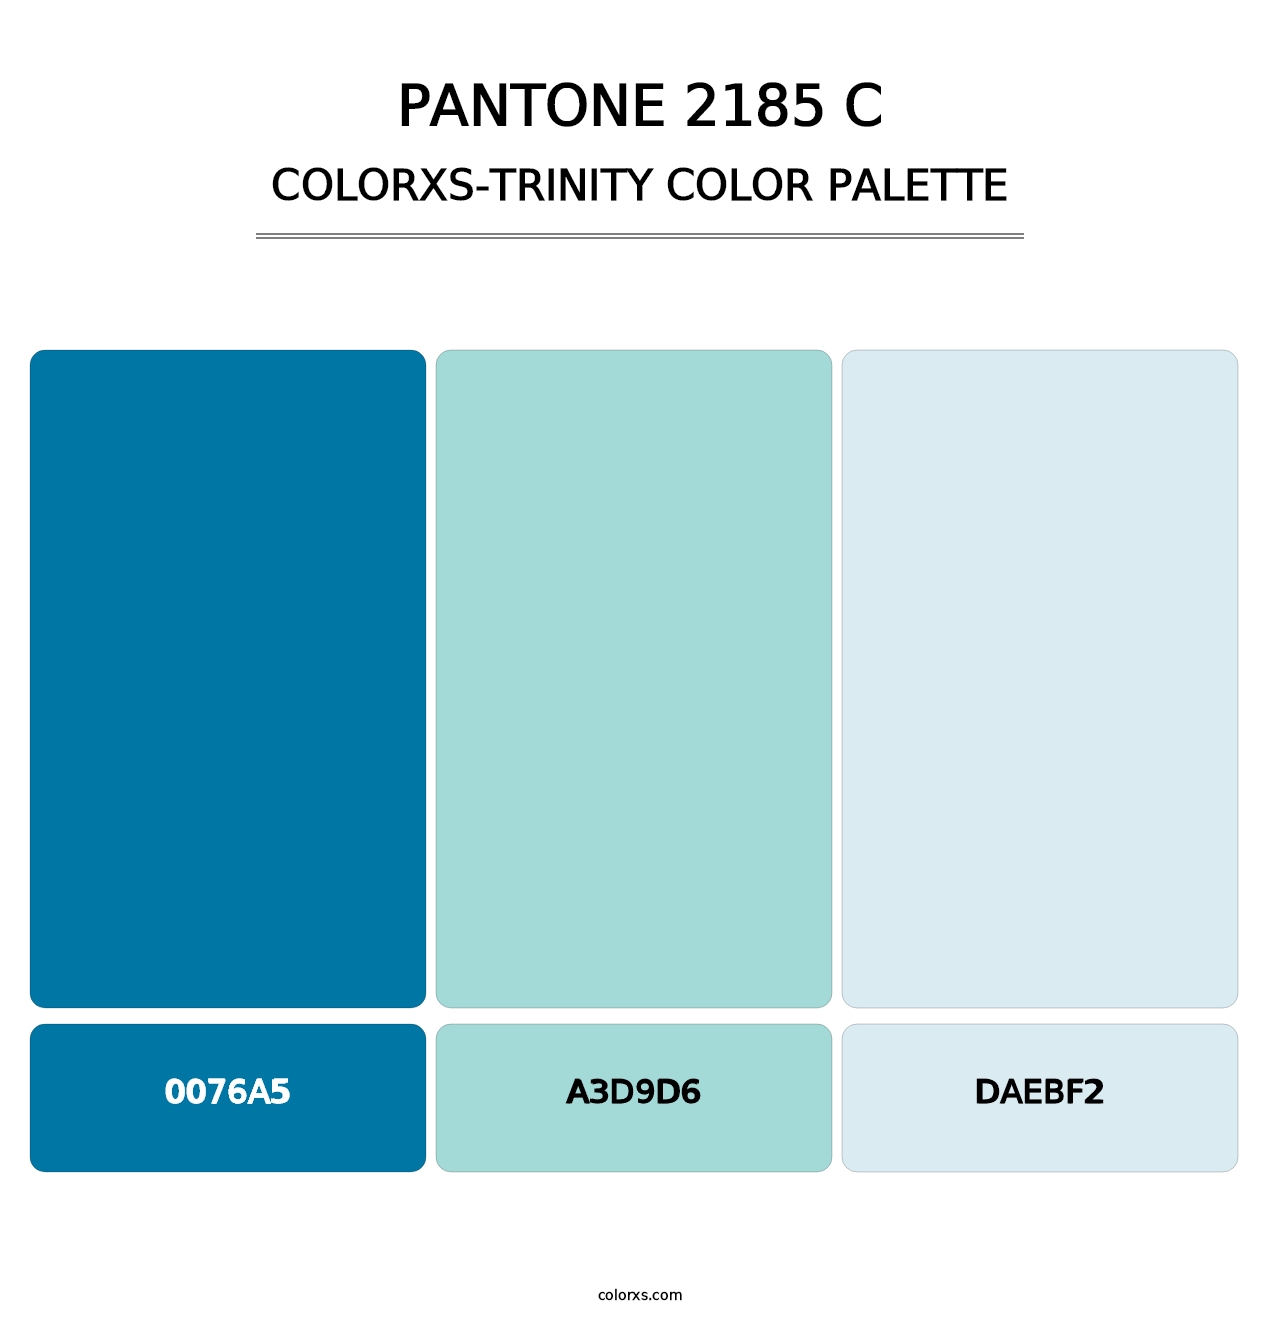 PANTONE 2185 C - Colorxs Trinity Palette